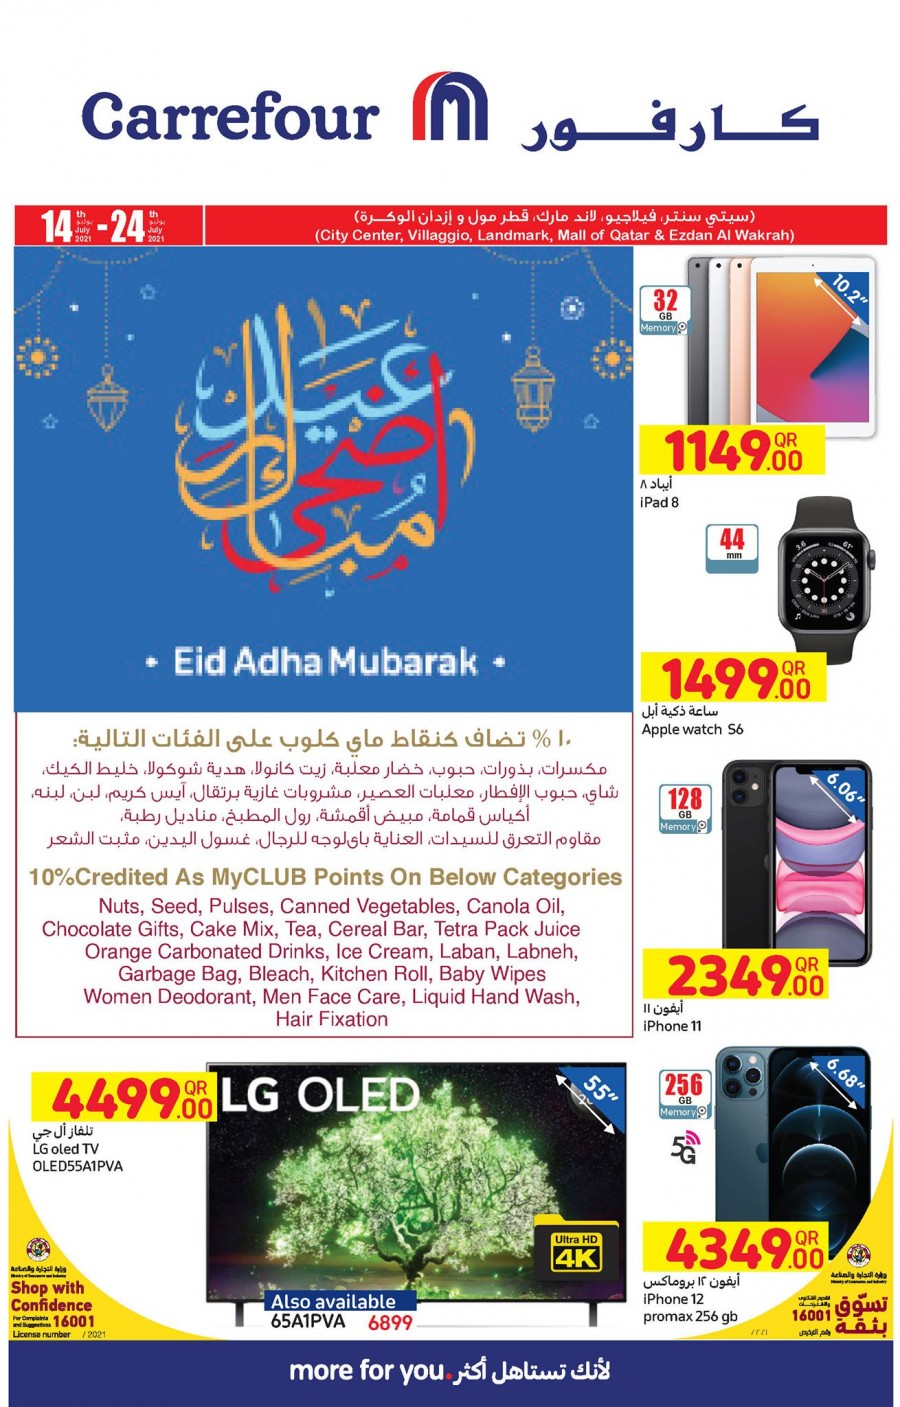 Carrefour Eid Adha Offers